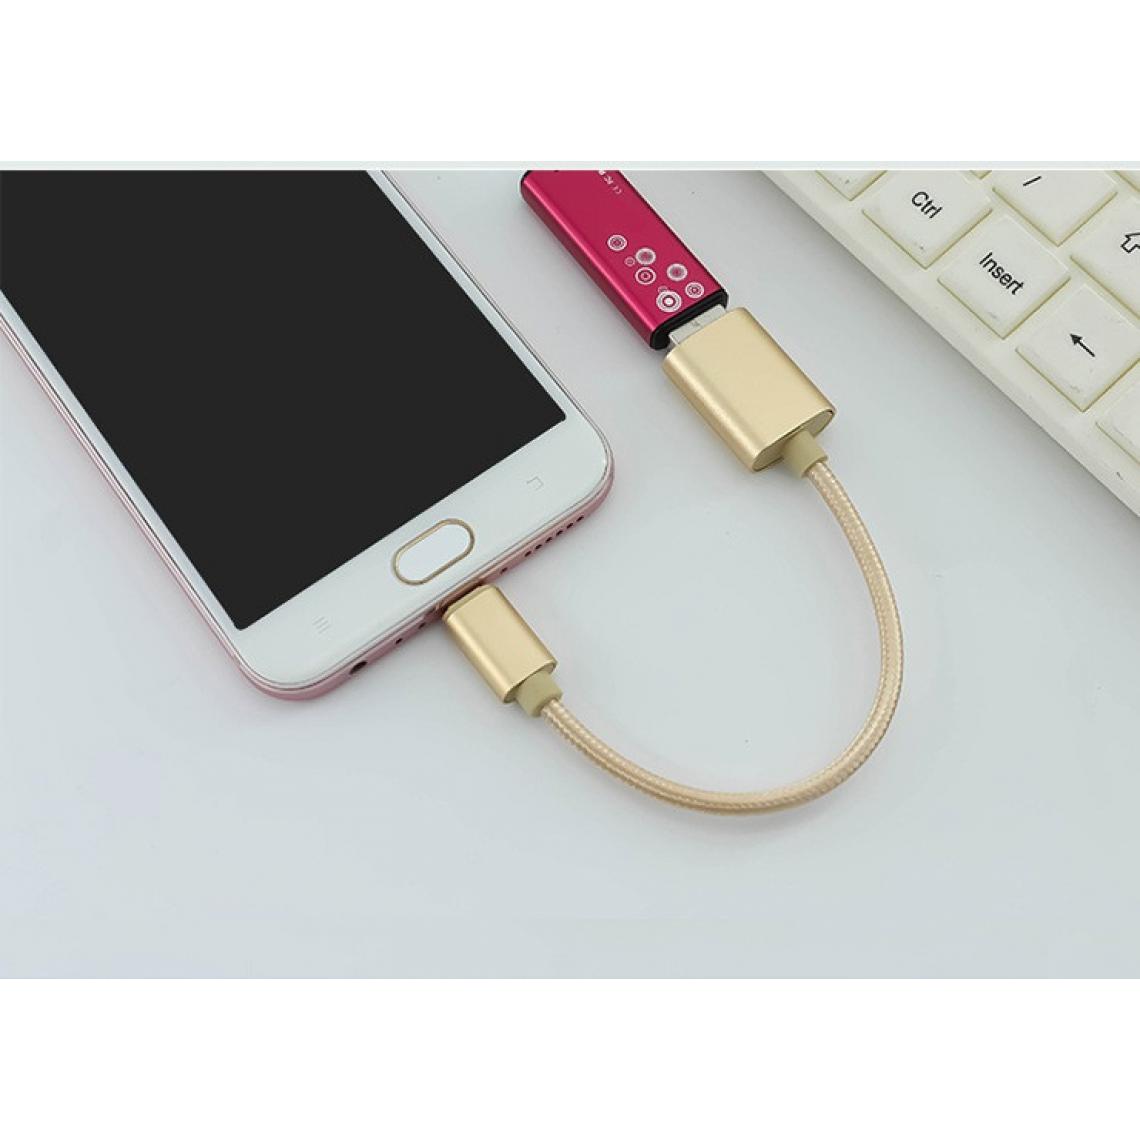 Shot - Adaptateur Type C/USB pour SONY Xperia L1 Smartphone & MAC USB-C Clef (OR) - Autres accessoires smartphone